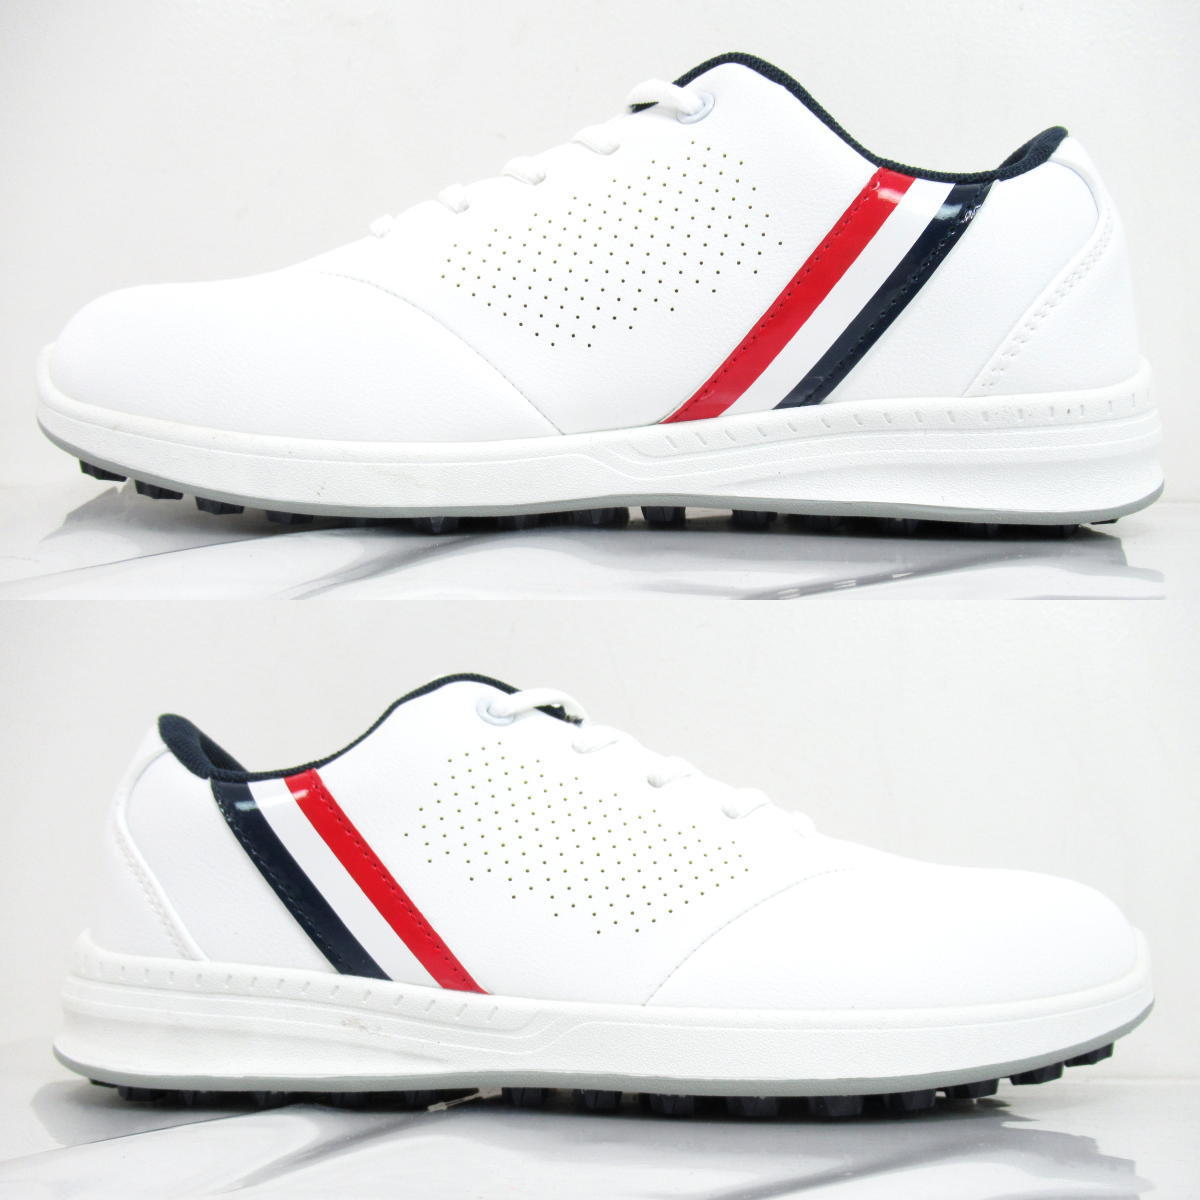 *US Athlete USSH-1770 spike less golf shoes white (26.5cm)* wide width 4E/ light weight design *